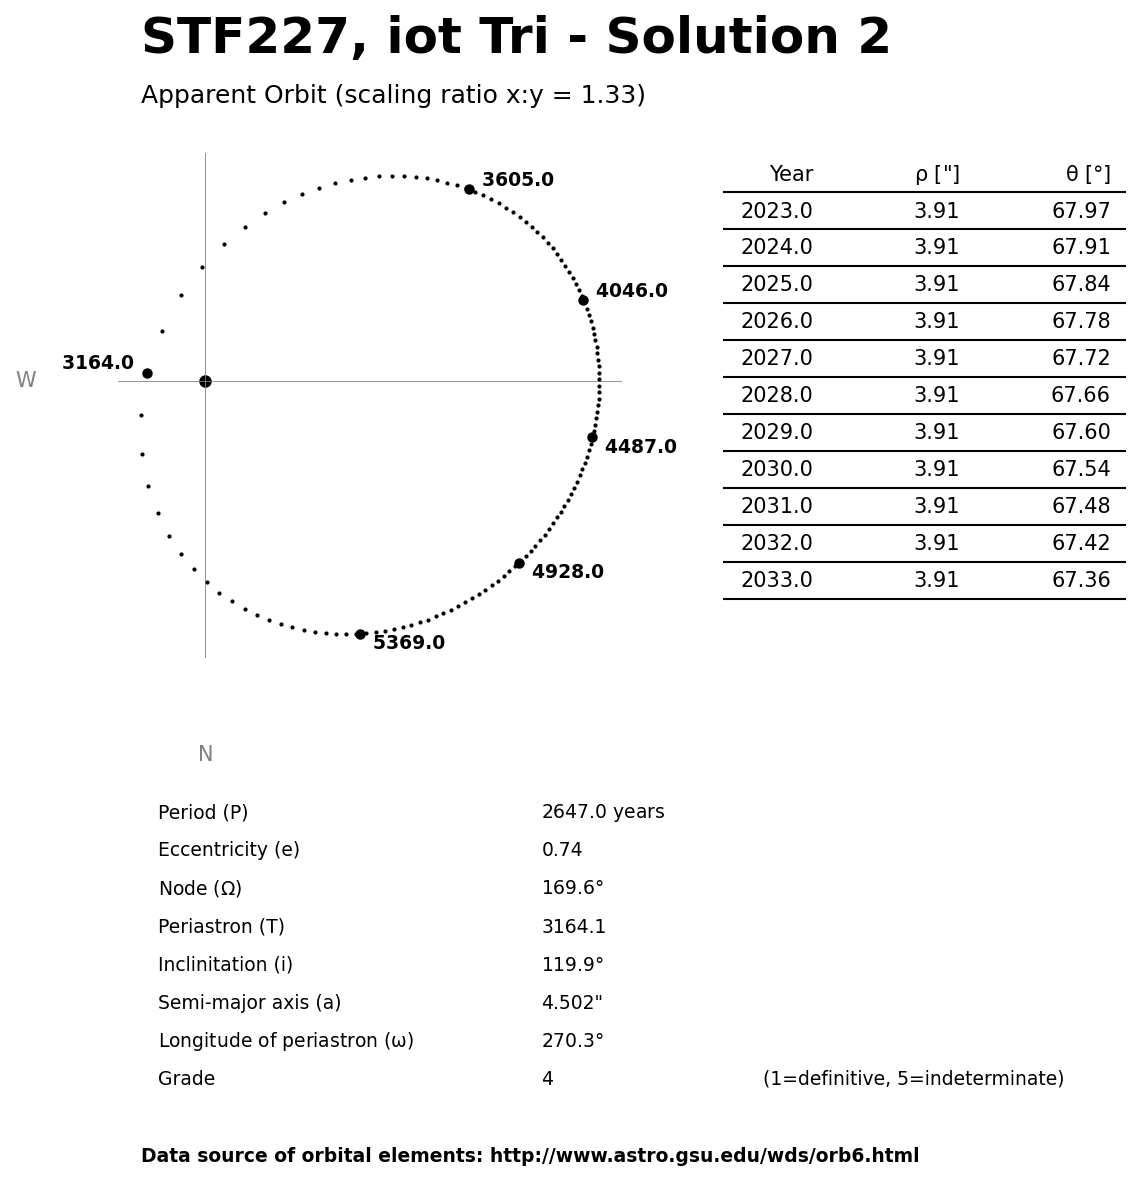 ../images/binary-star-orbits/STF227-orbit-solution-2.jpg